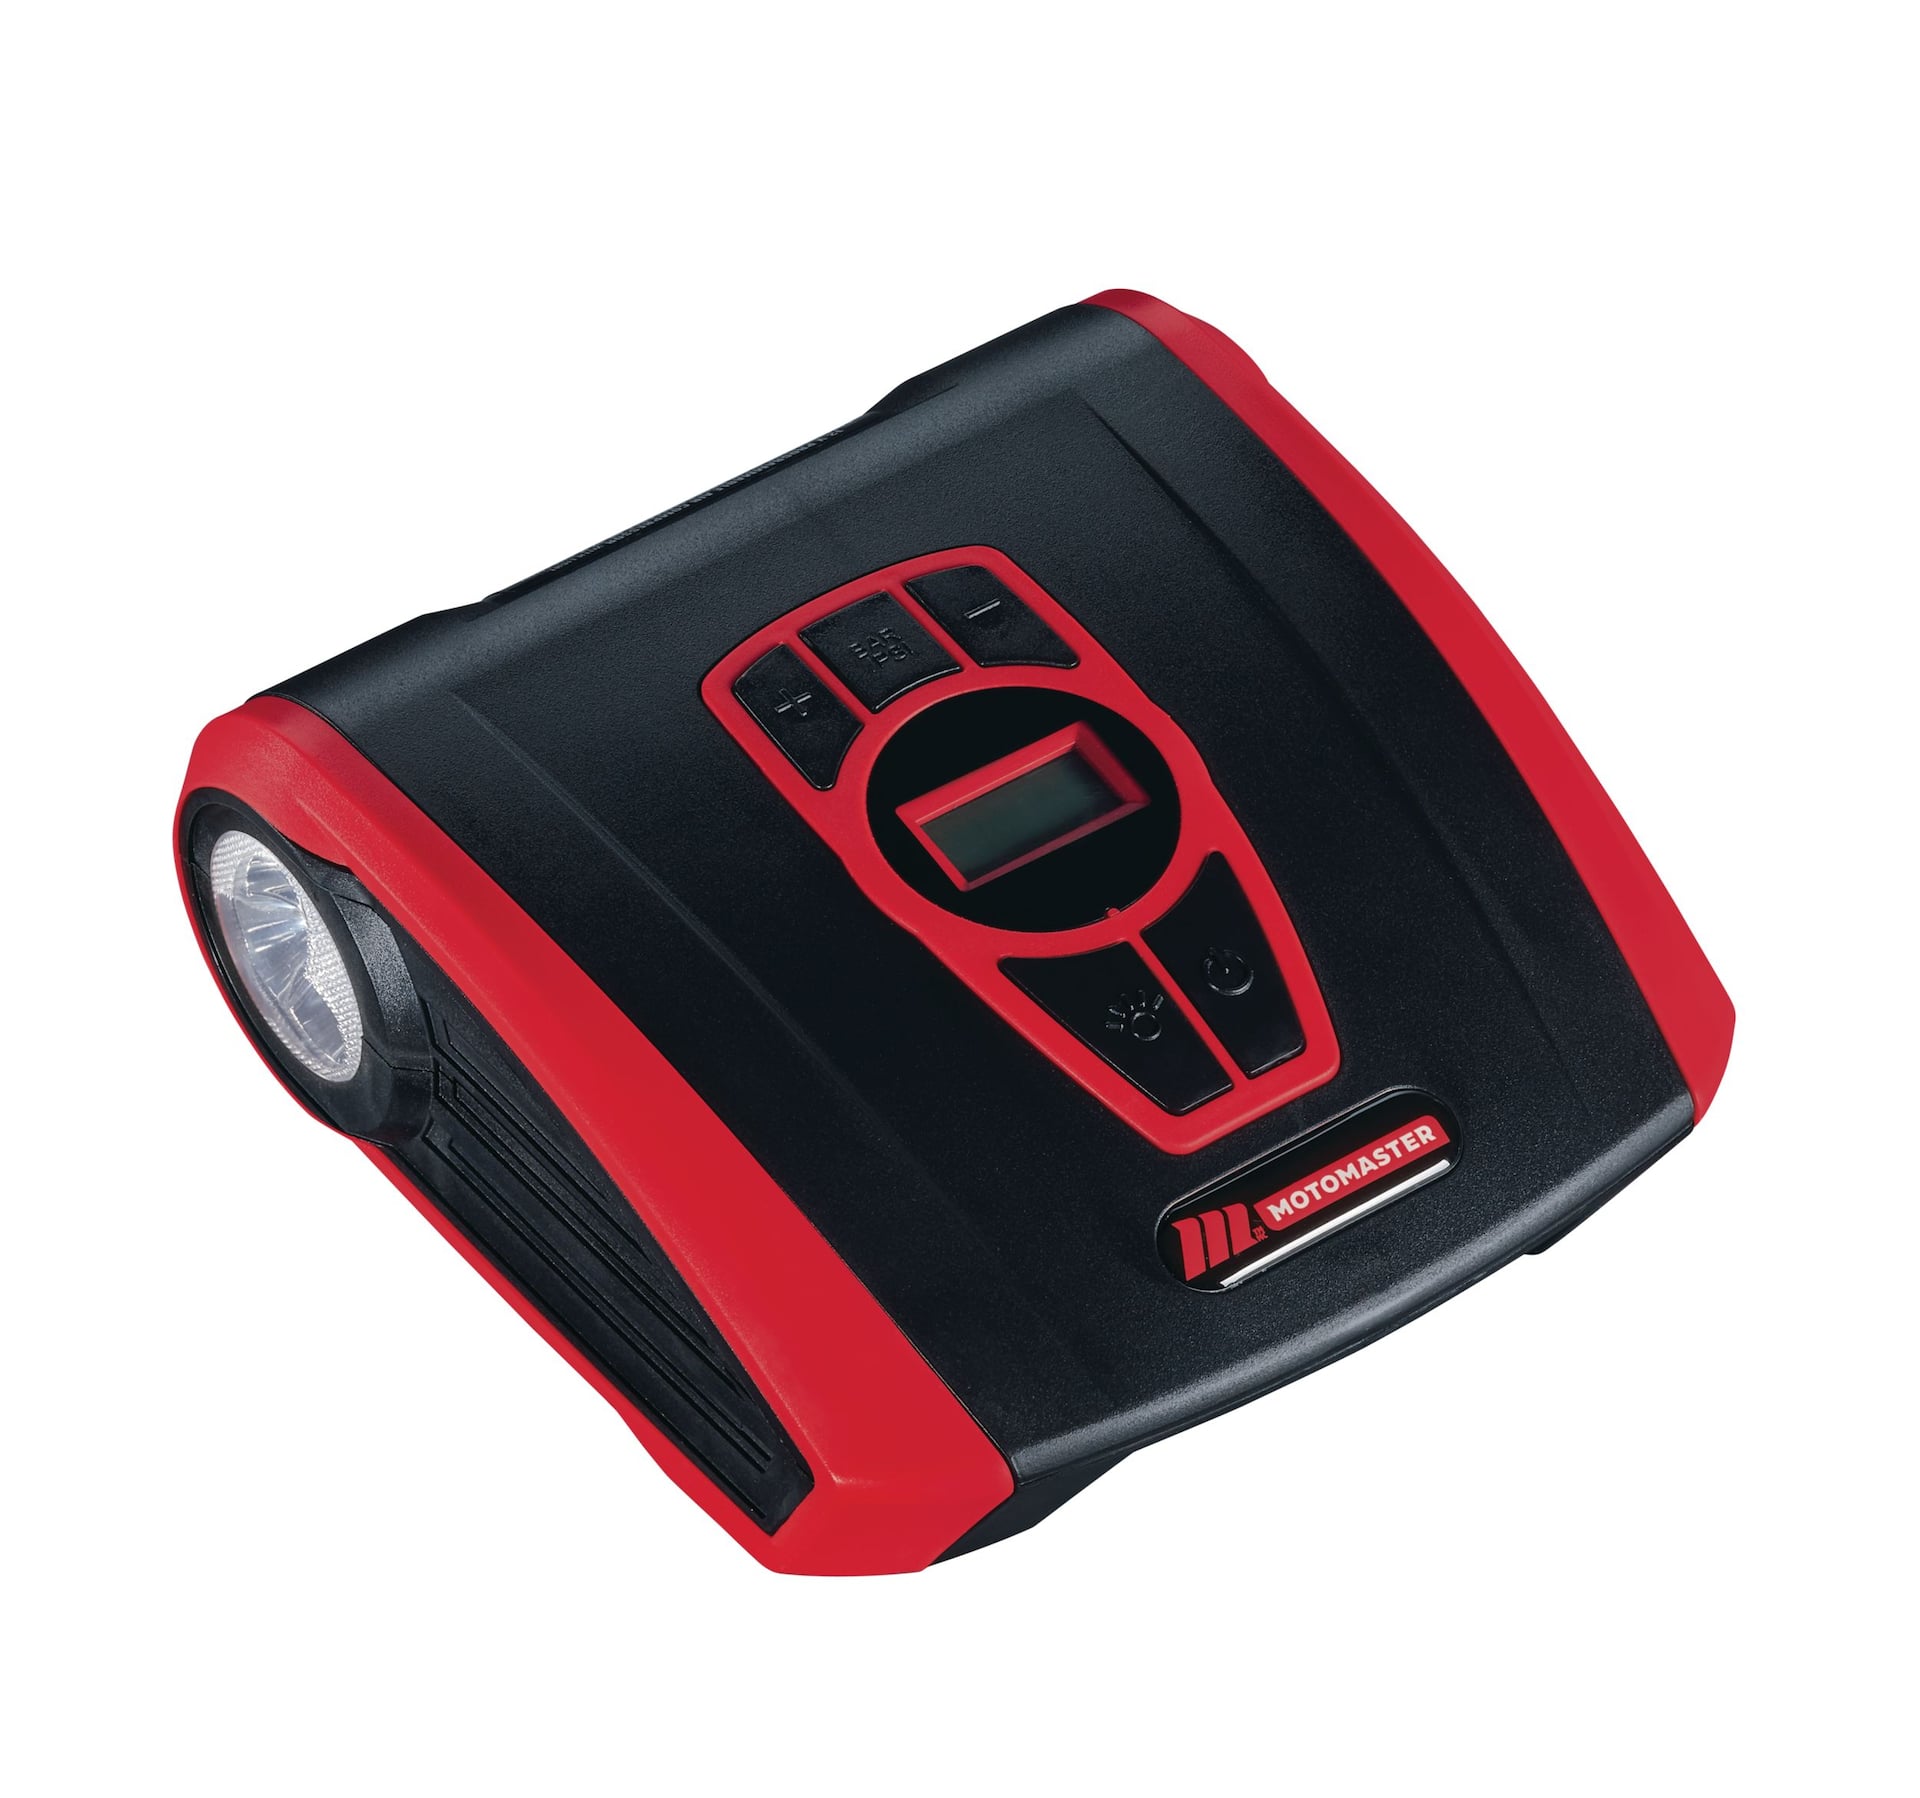 MotoMaster 12 V Digital Portable Air Compressor / Tire Inflator, 6 Min